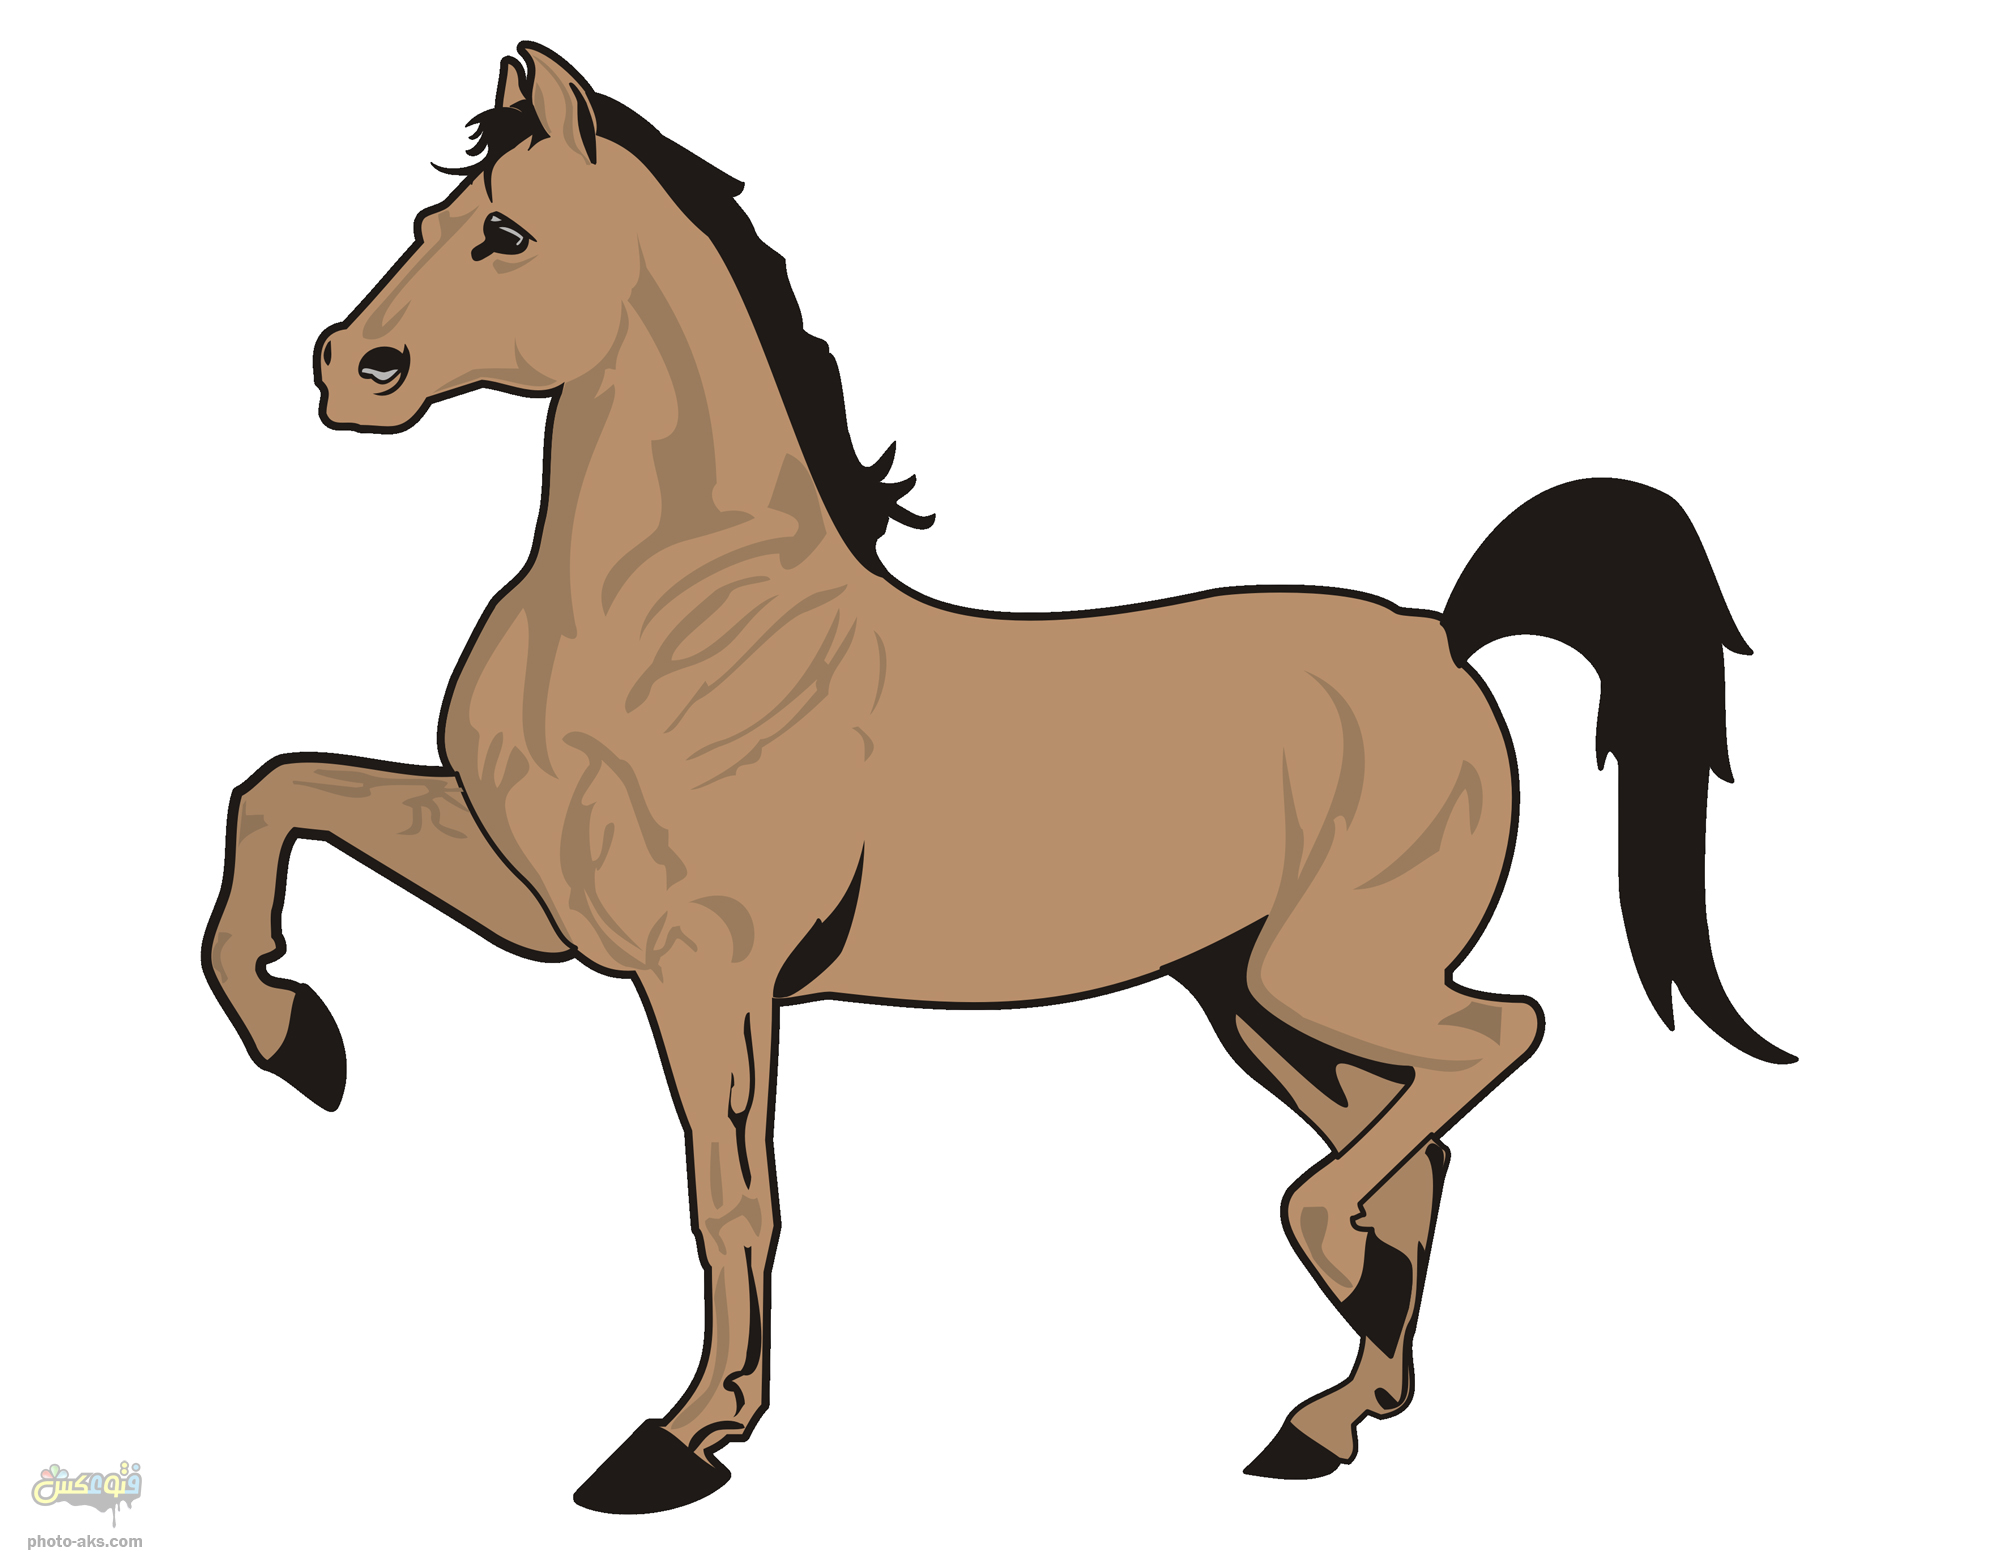 1529989884cartoon-horse.jpg